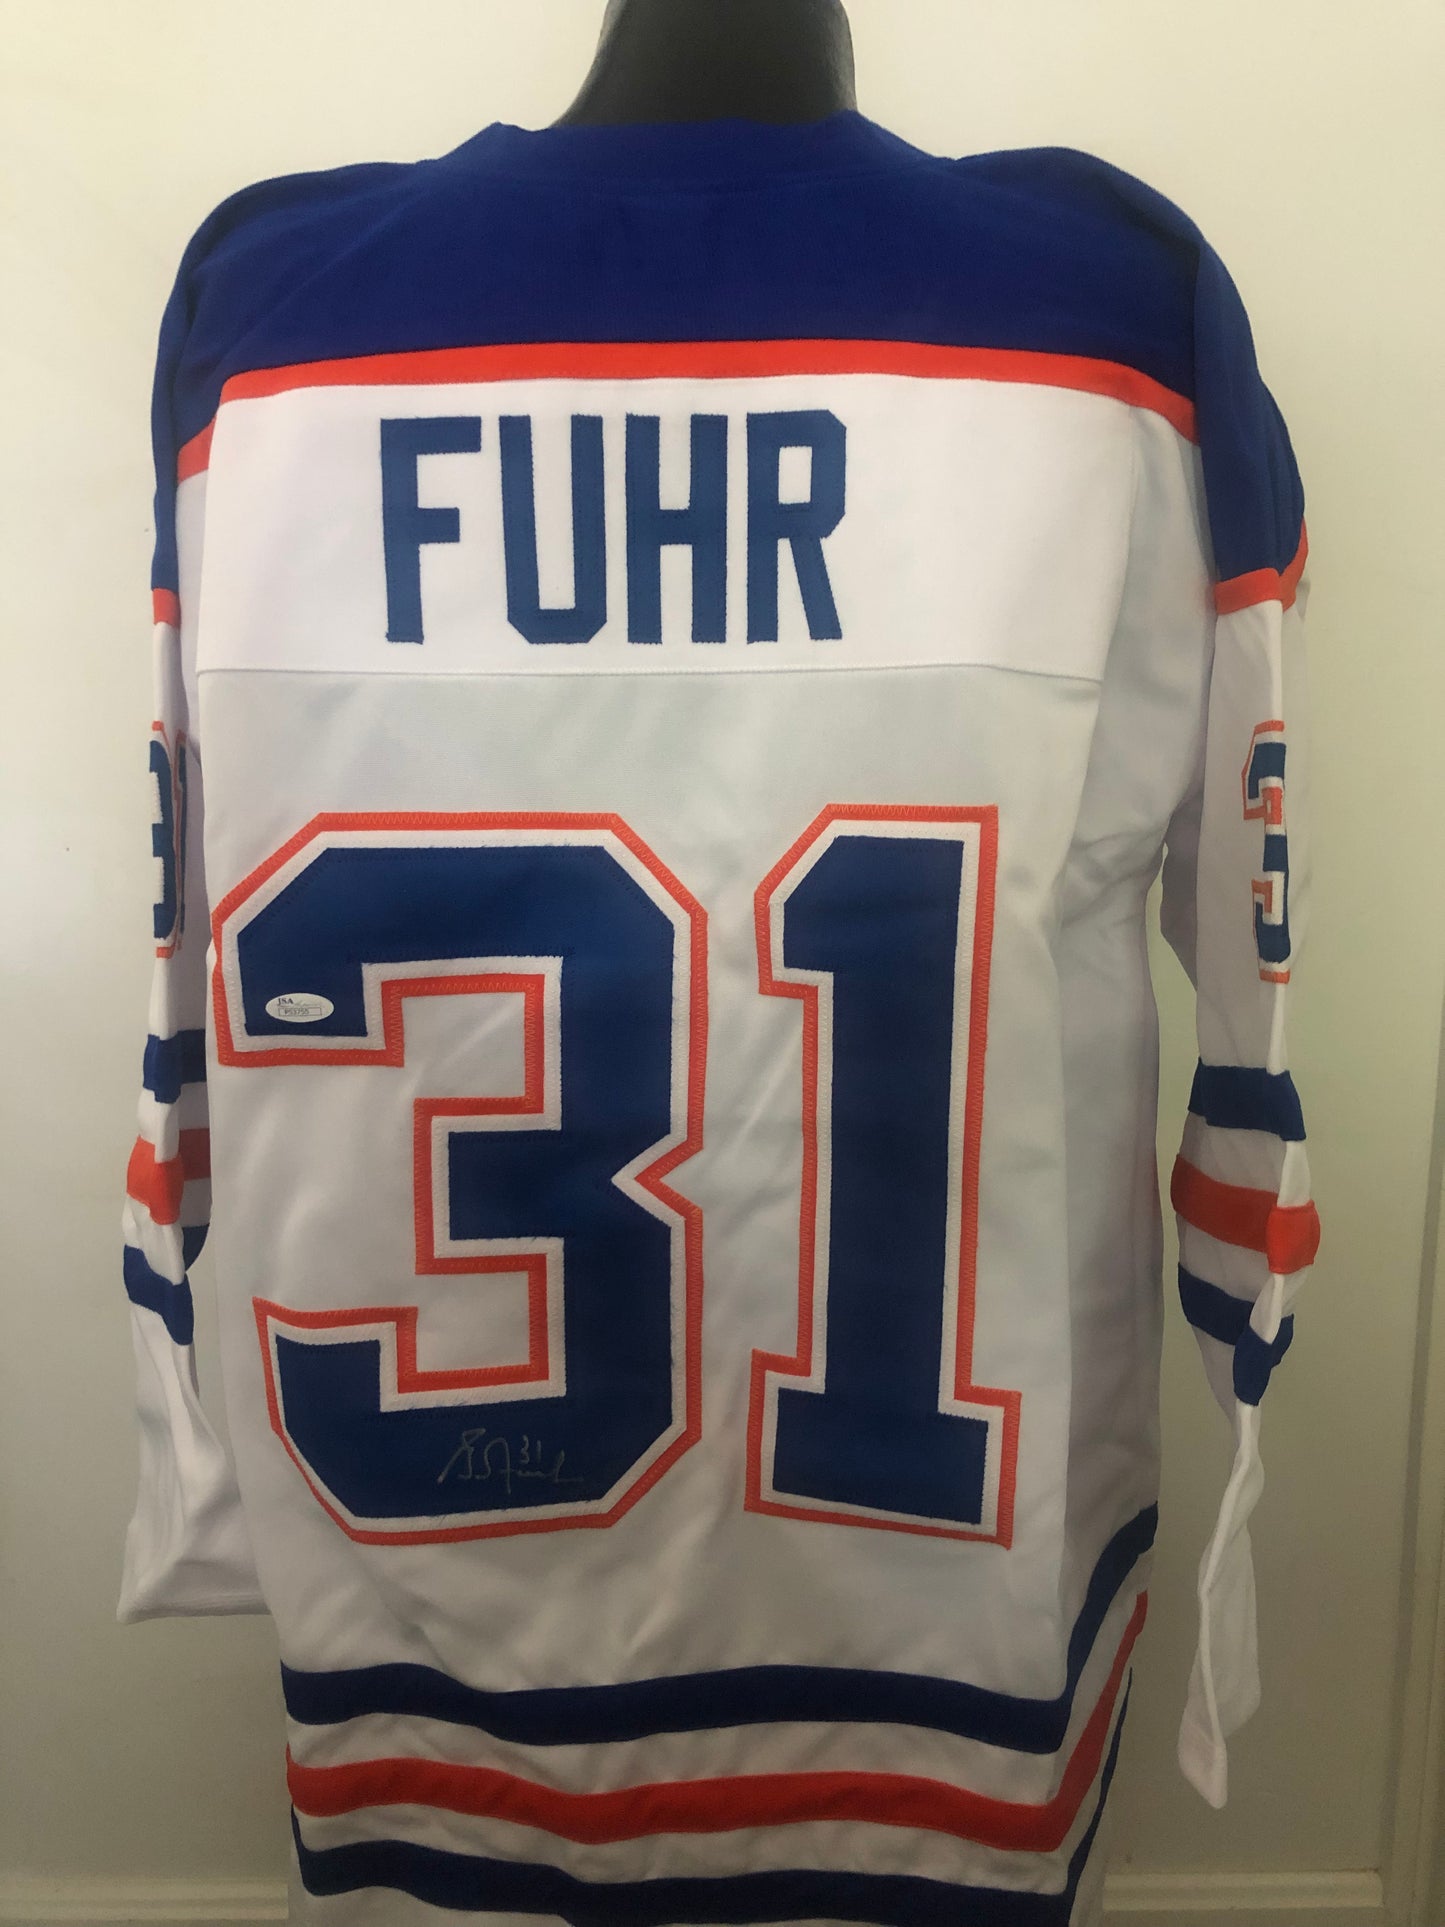 Edmonton Oilers Grant Fuhr signed custom jersey with JSA